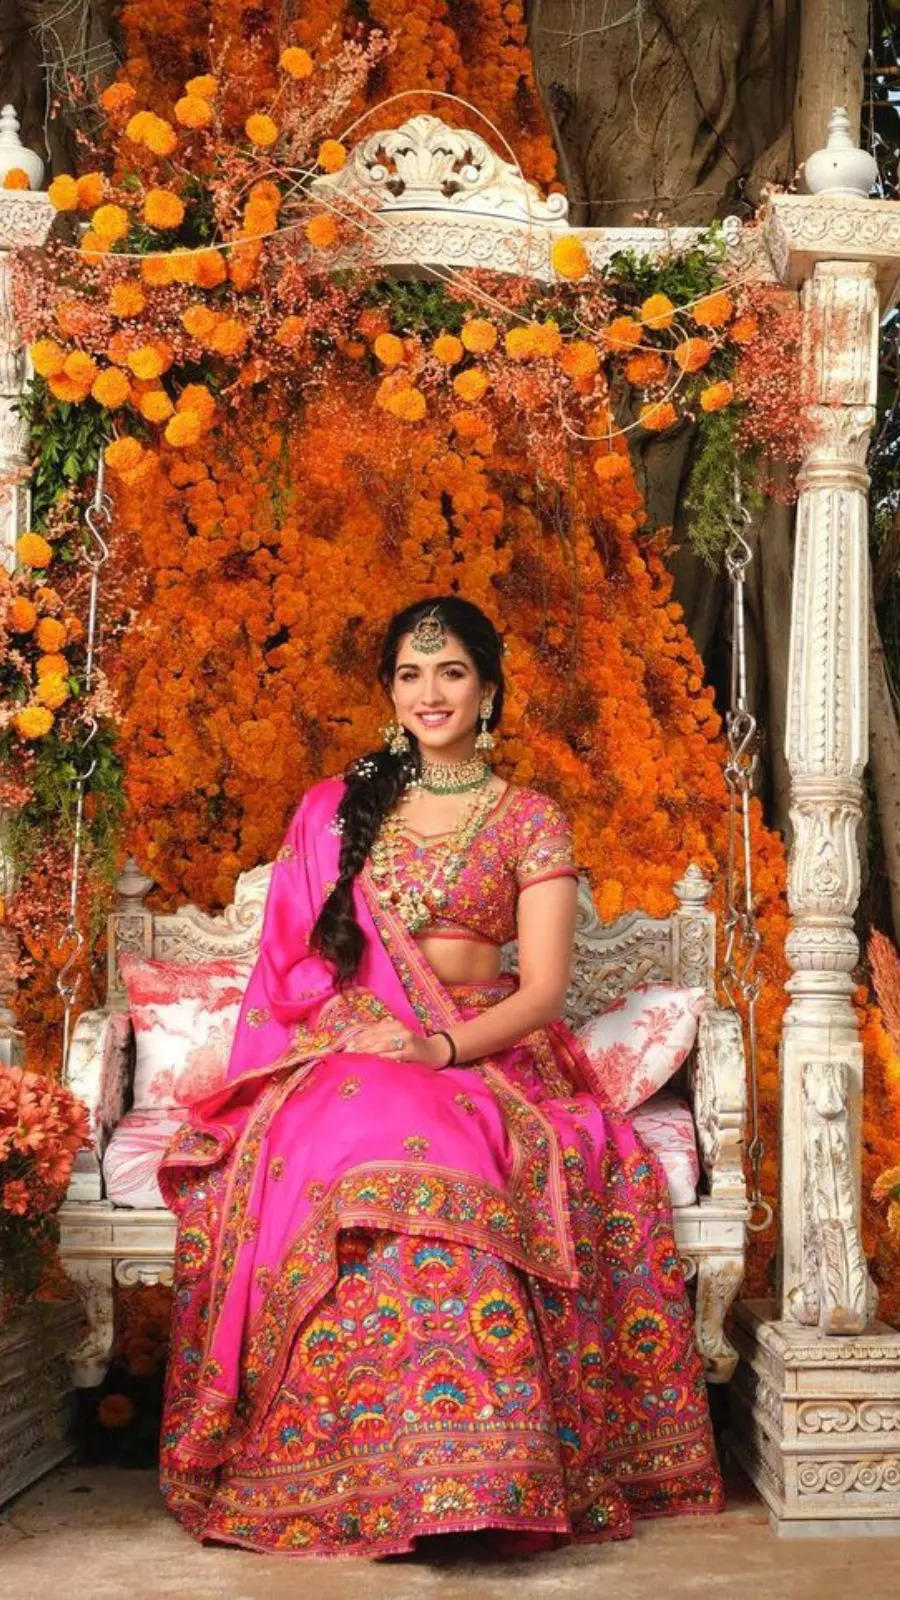 Radhika Merchant Inspired Bridal Lehenga Looks To Slay At Your Wedding!